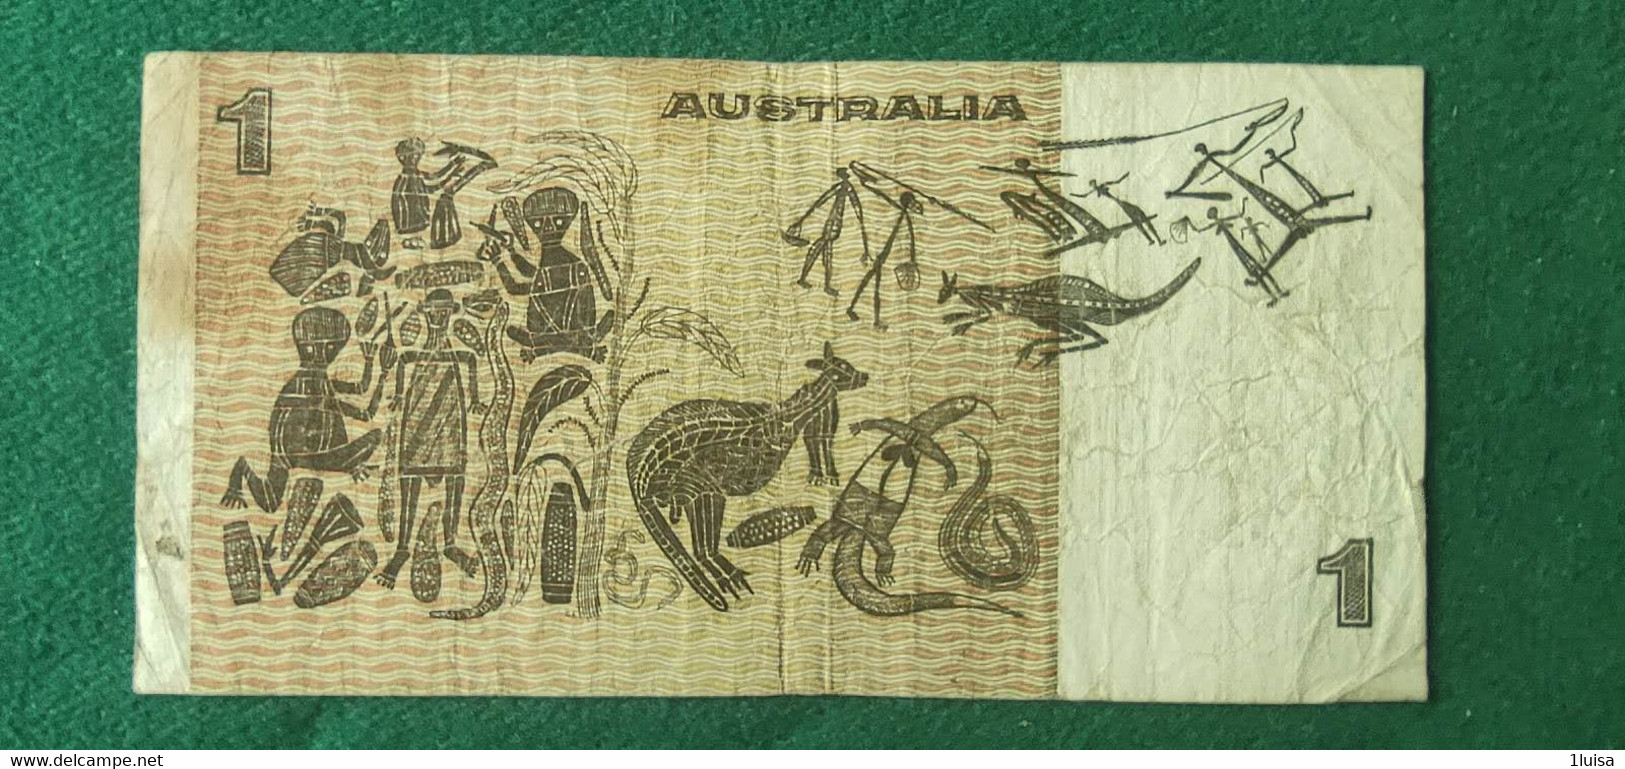 Australia 1 Dollar - 1988 (10$ Polymer)